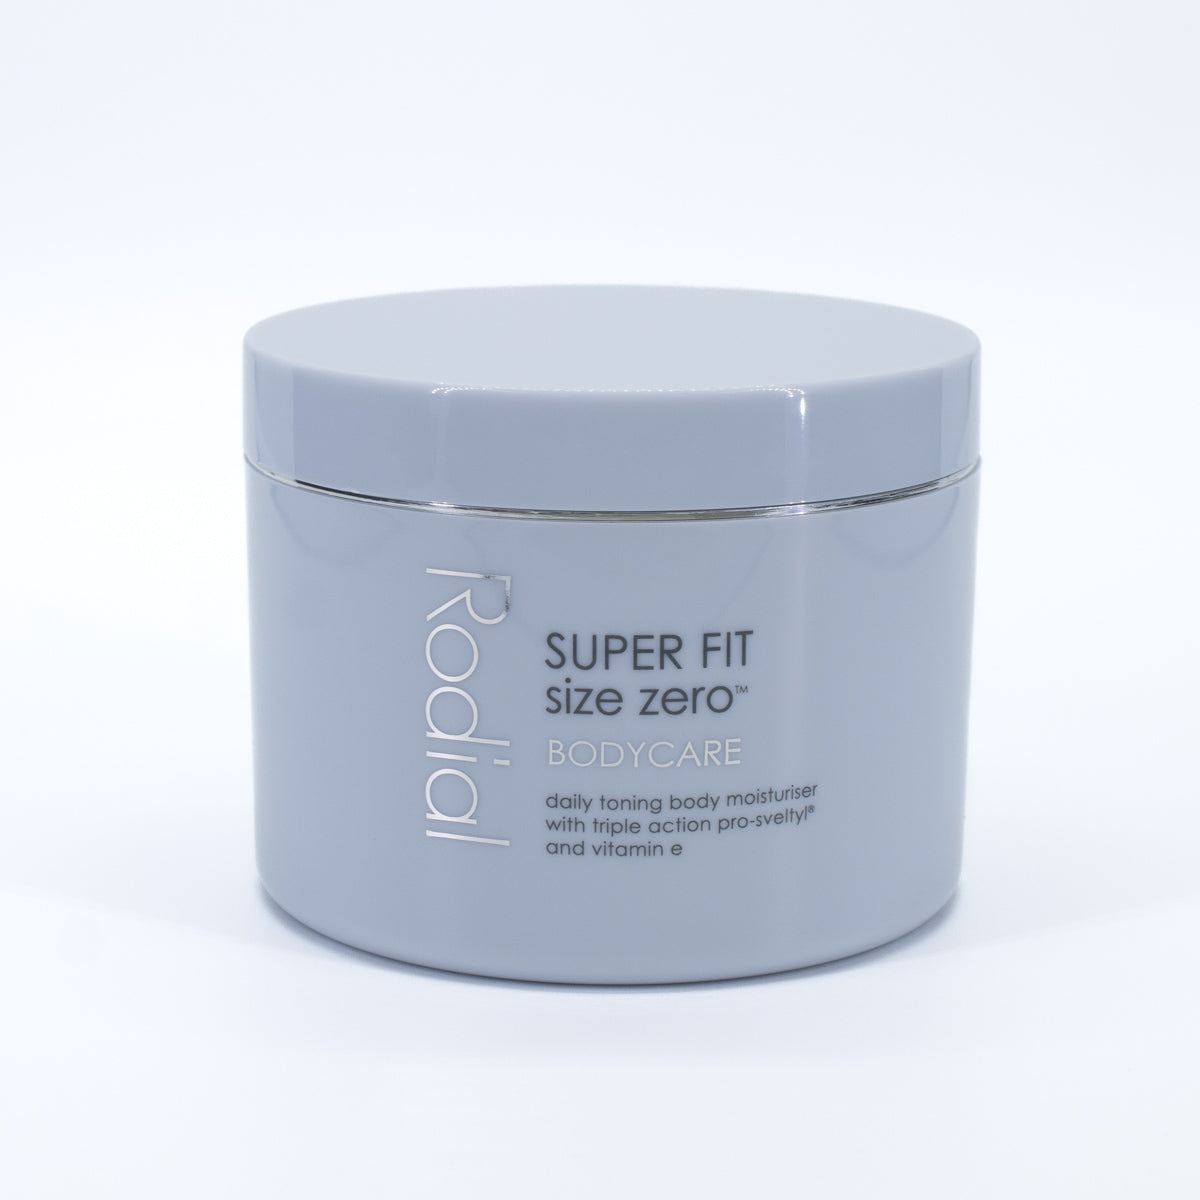 Rodial Super Fit Size Zero Daily Toning Body Moisturiser 10.1oz - Imperfect Box